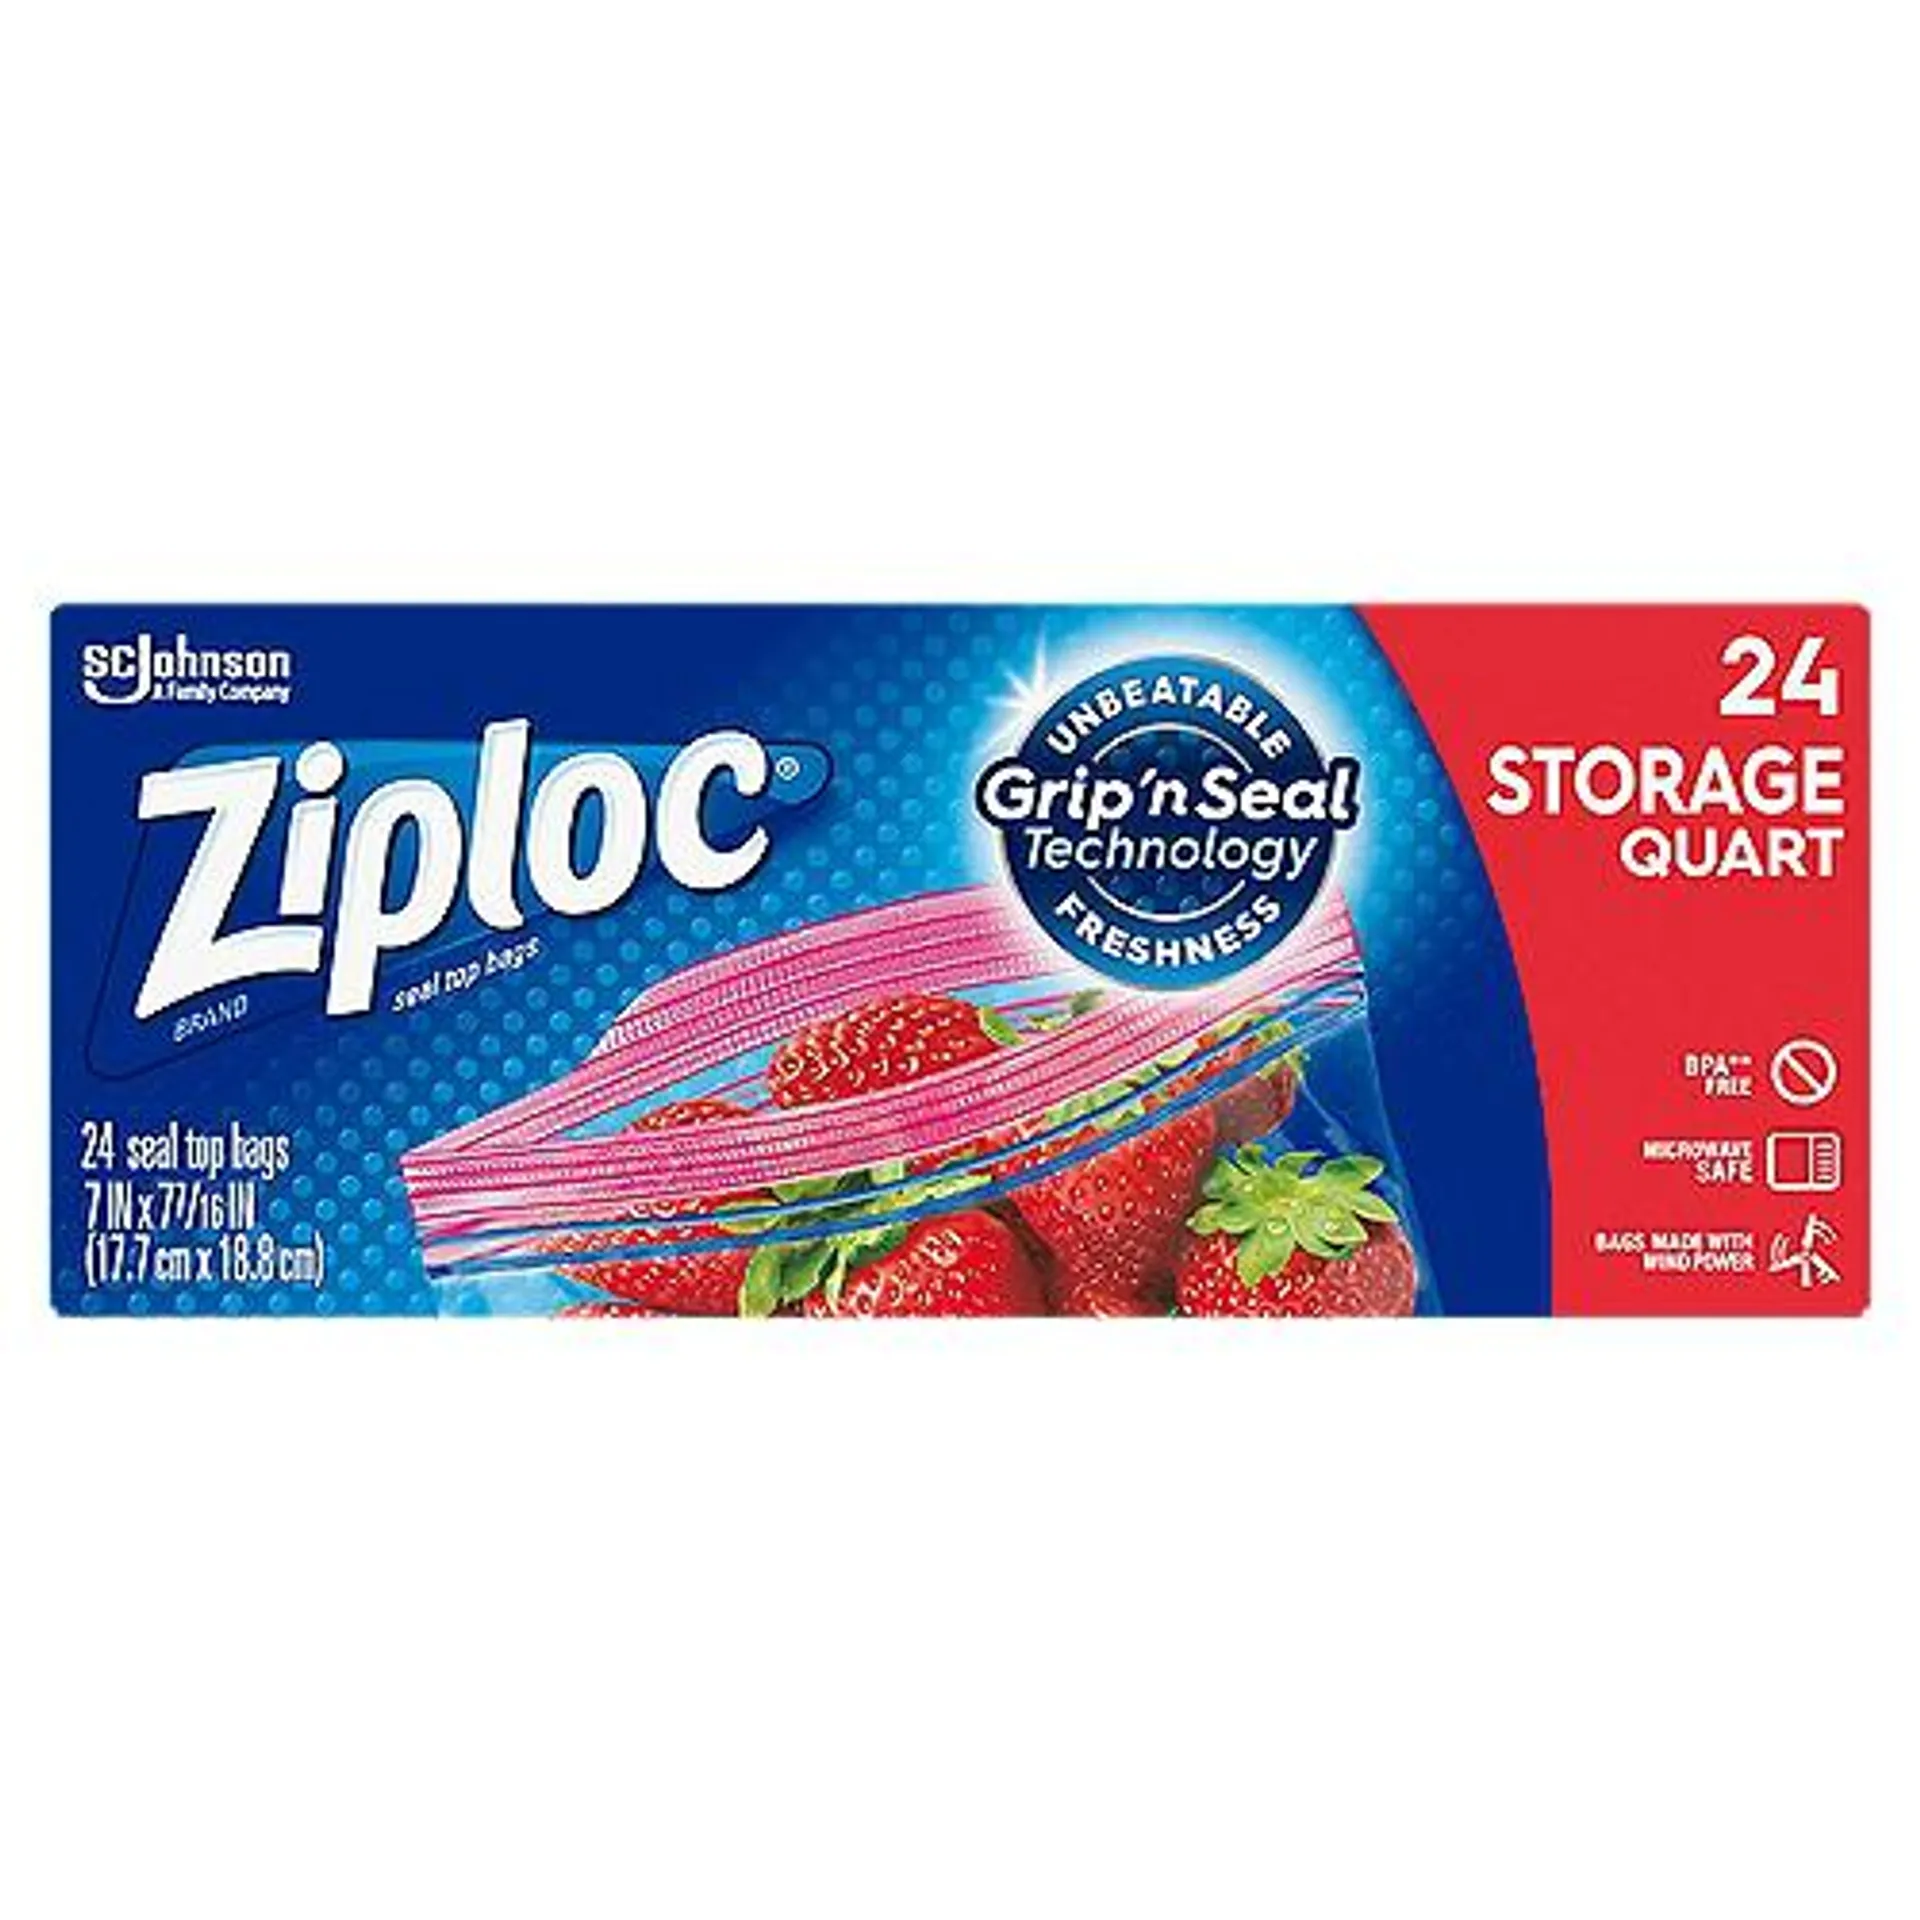 Ziploc Grip 'n Seal Technology, Storage Quart Bags, 24 Each